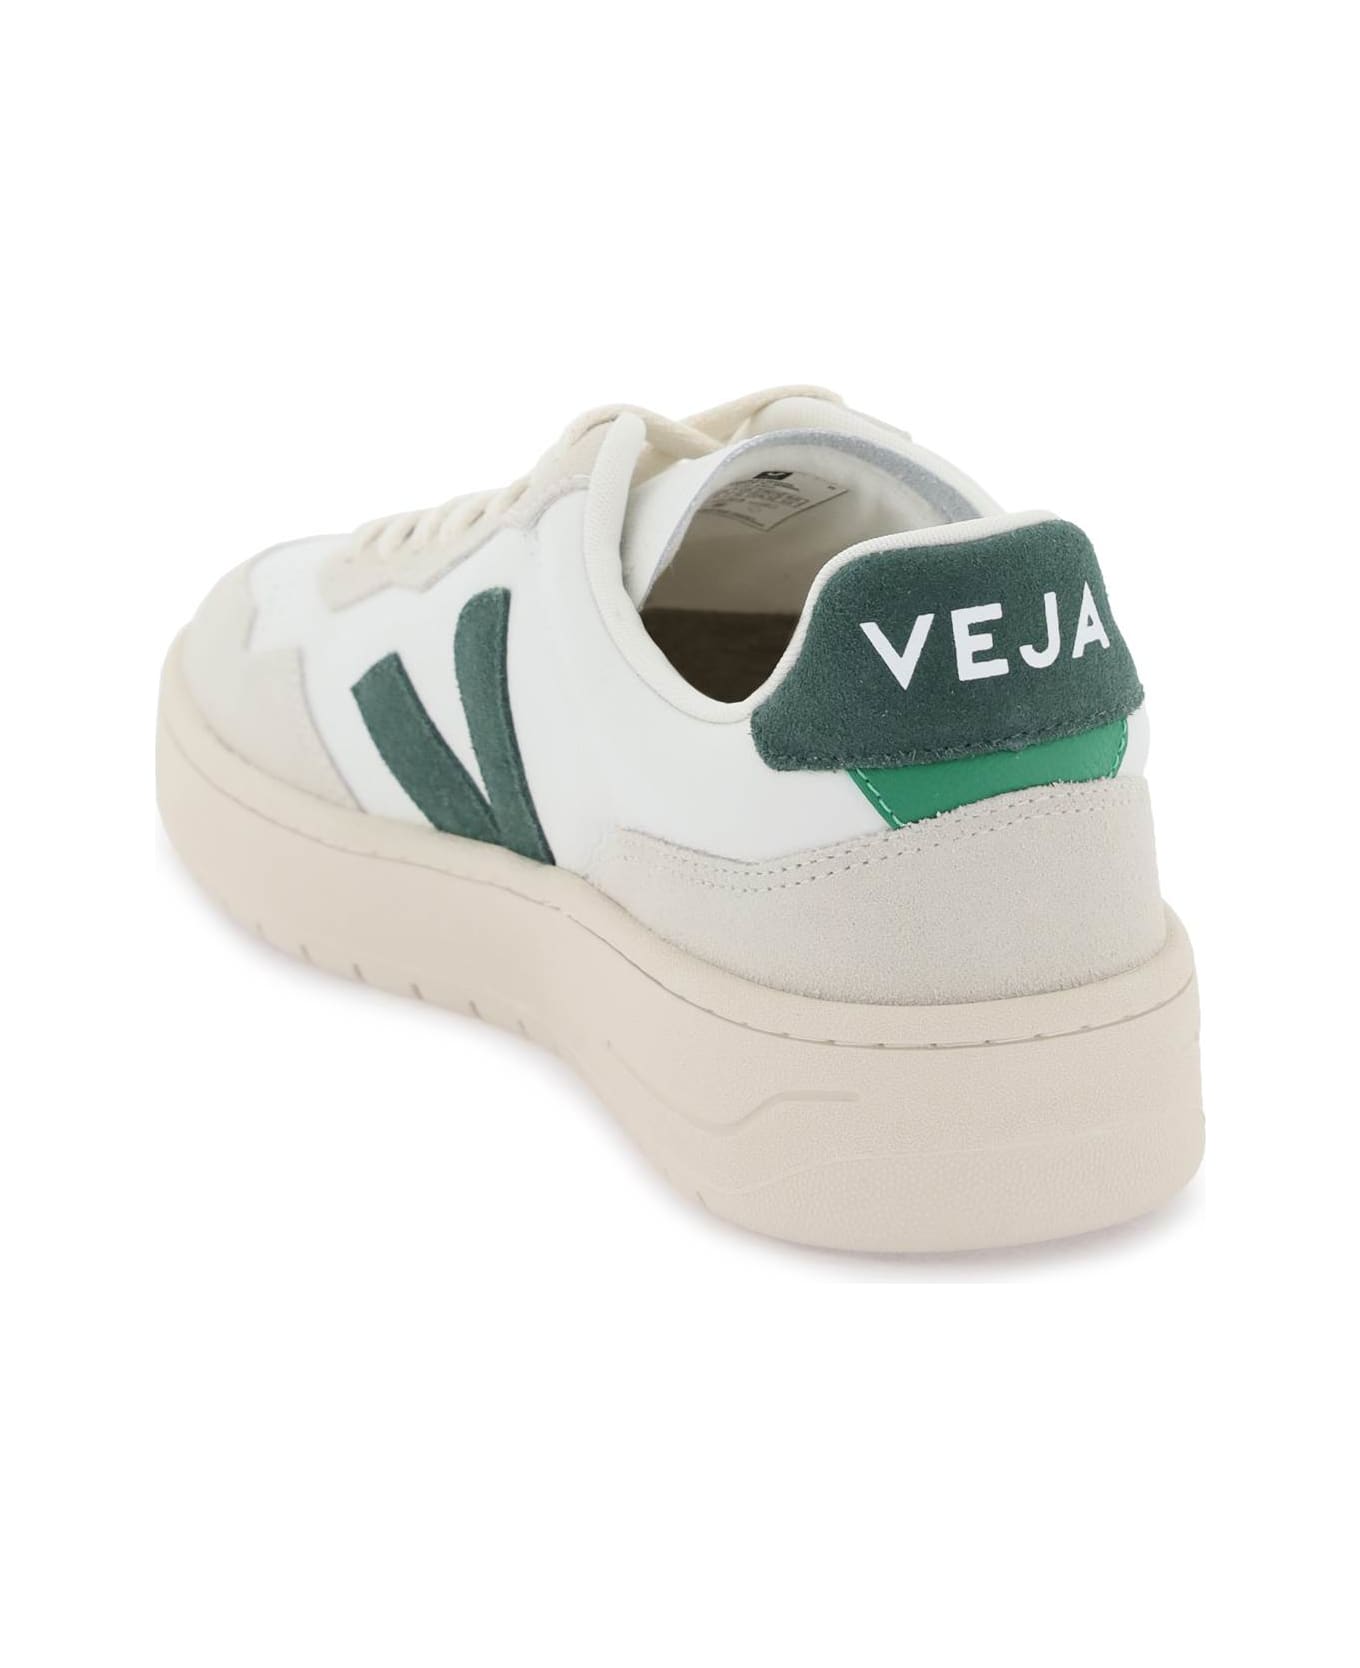 Veja V-90 Sneakers - EXTRA WHITE CYPRUS (White)